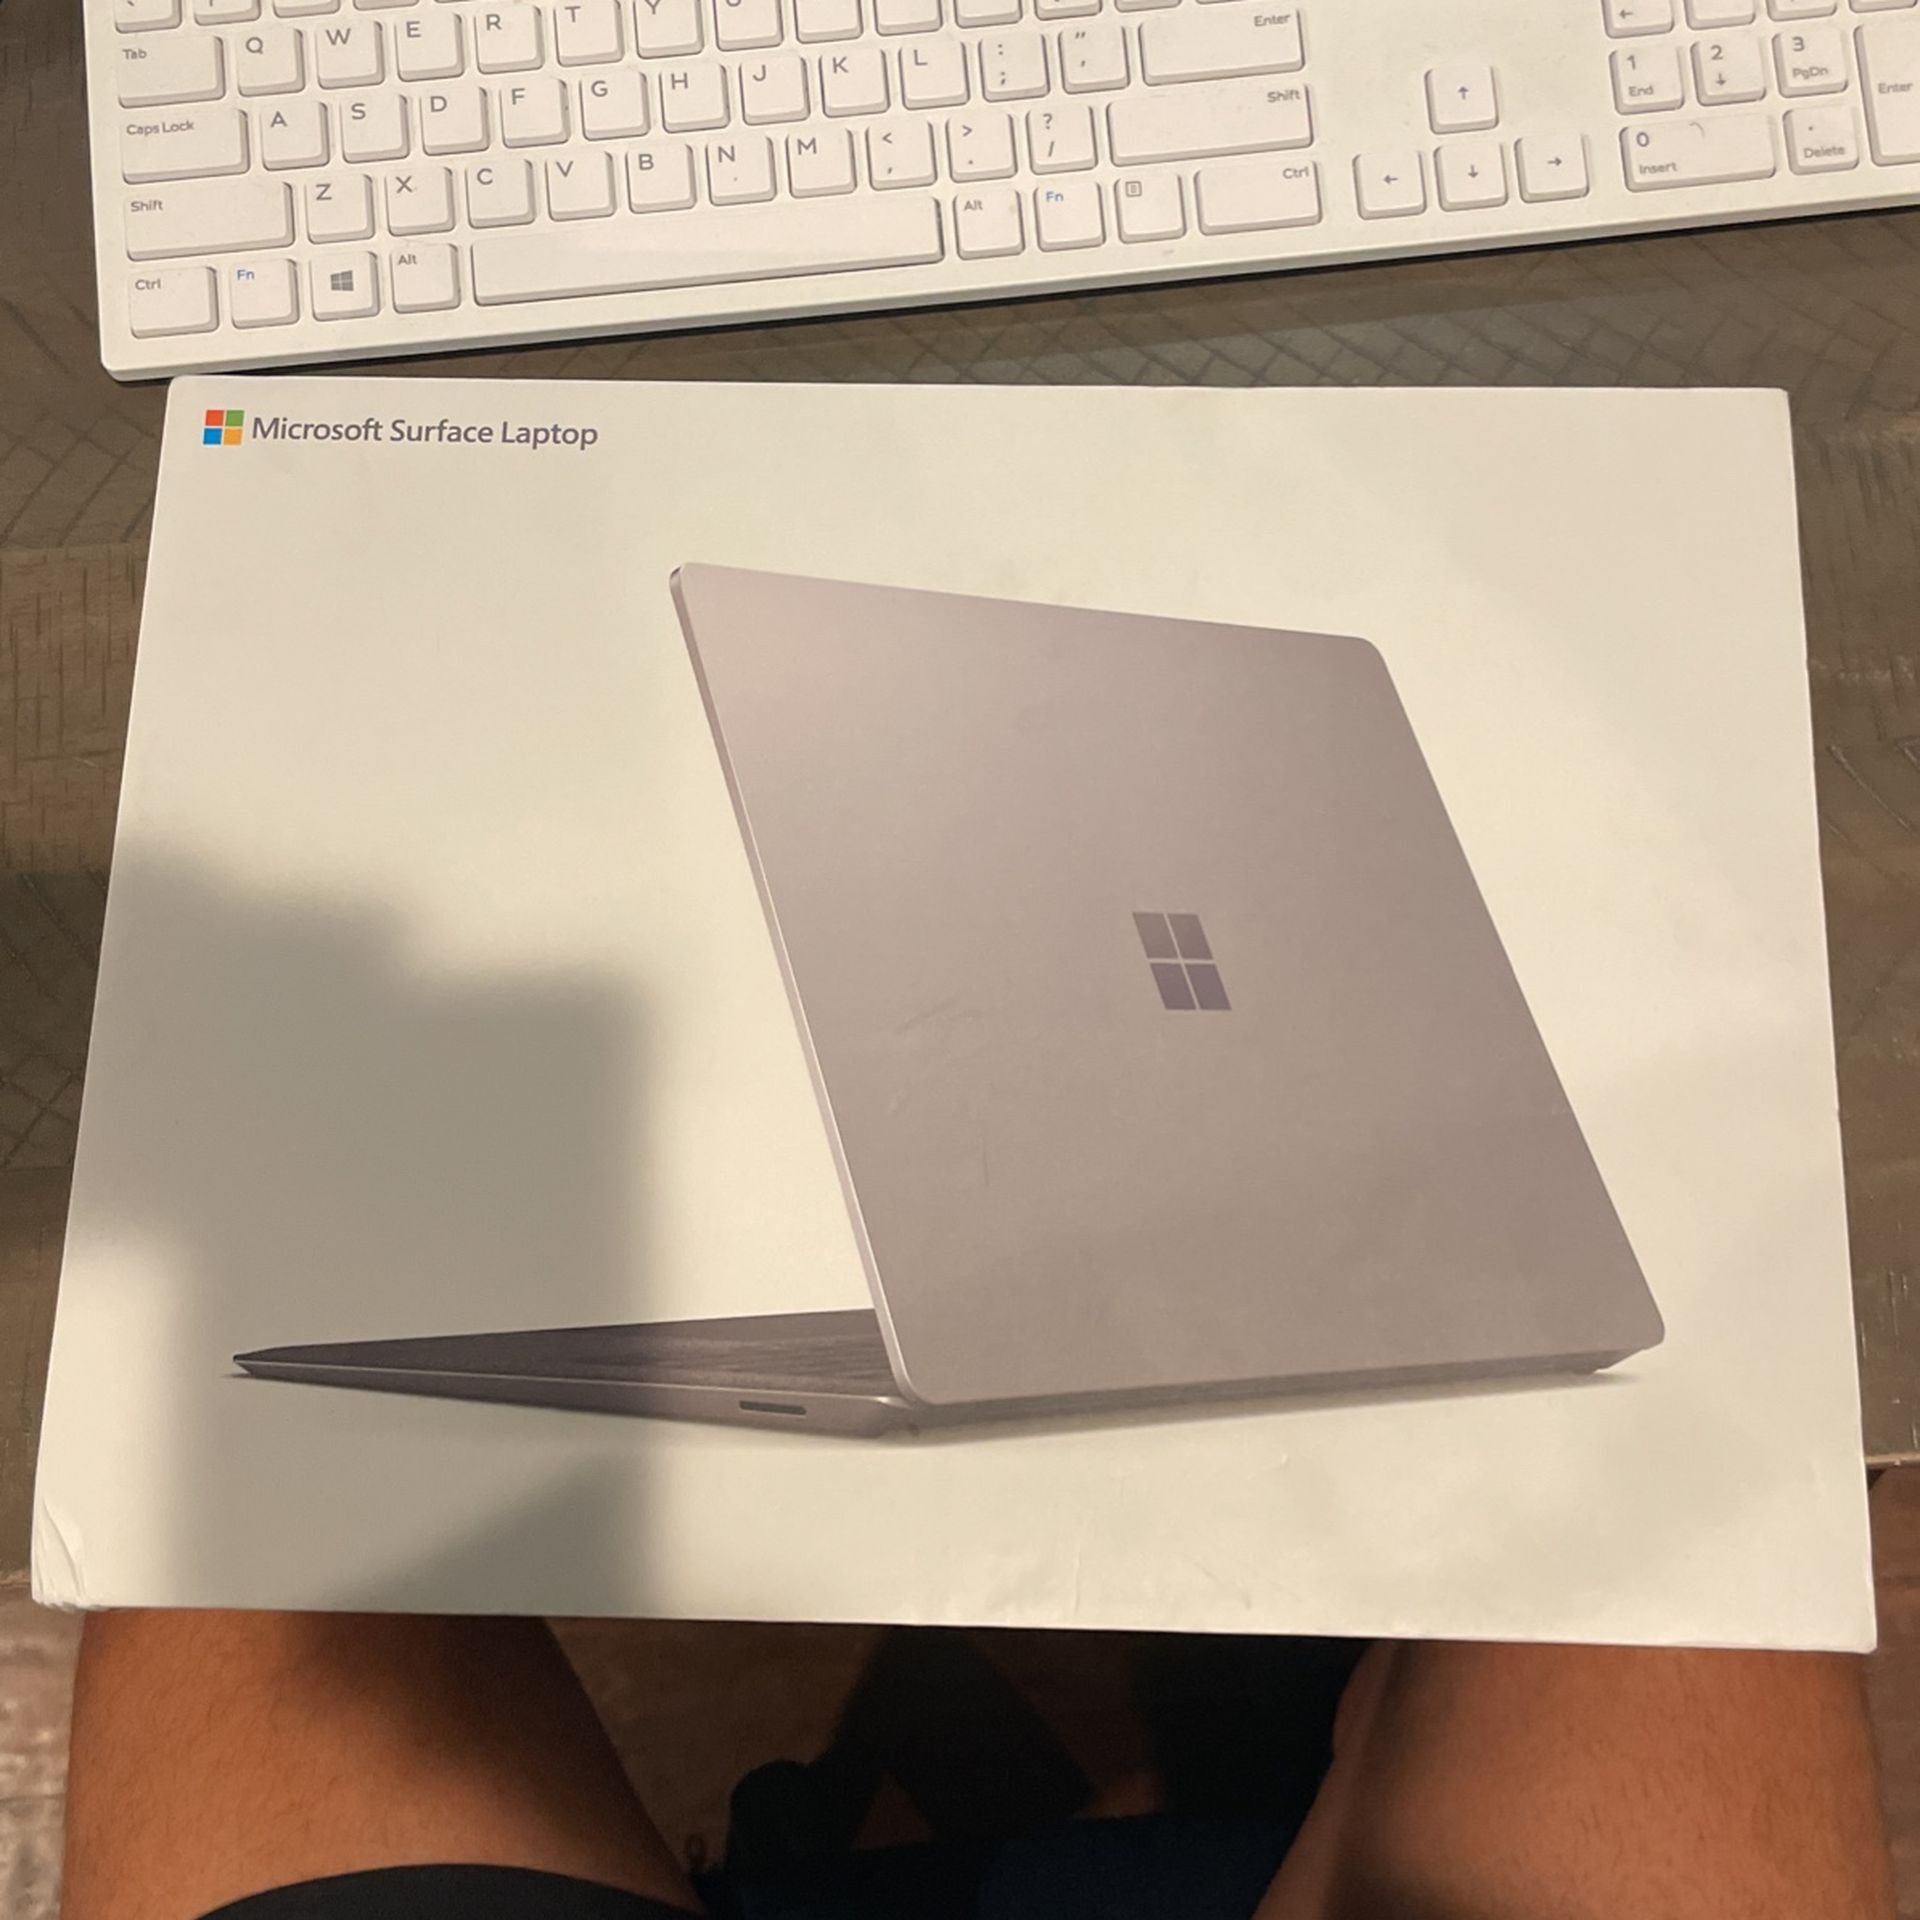 Microsoft Surface laptop 13” i5 128GB